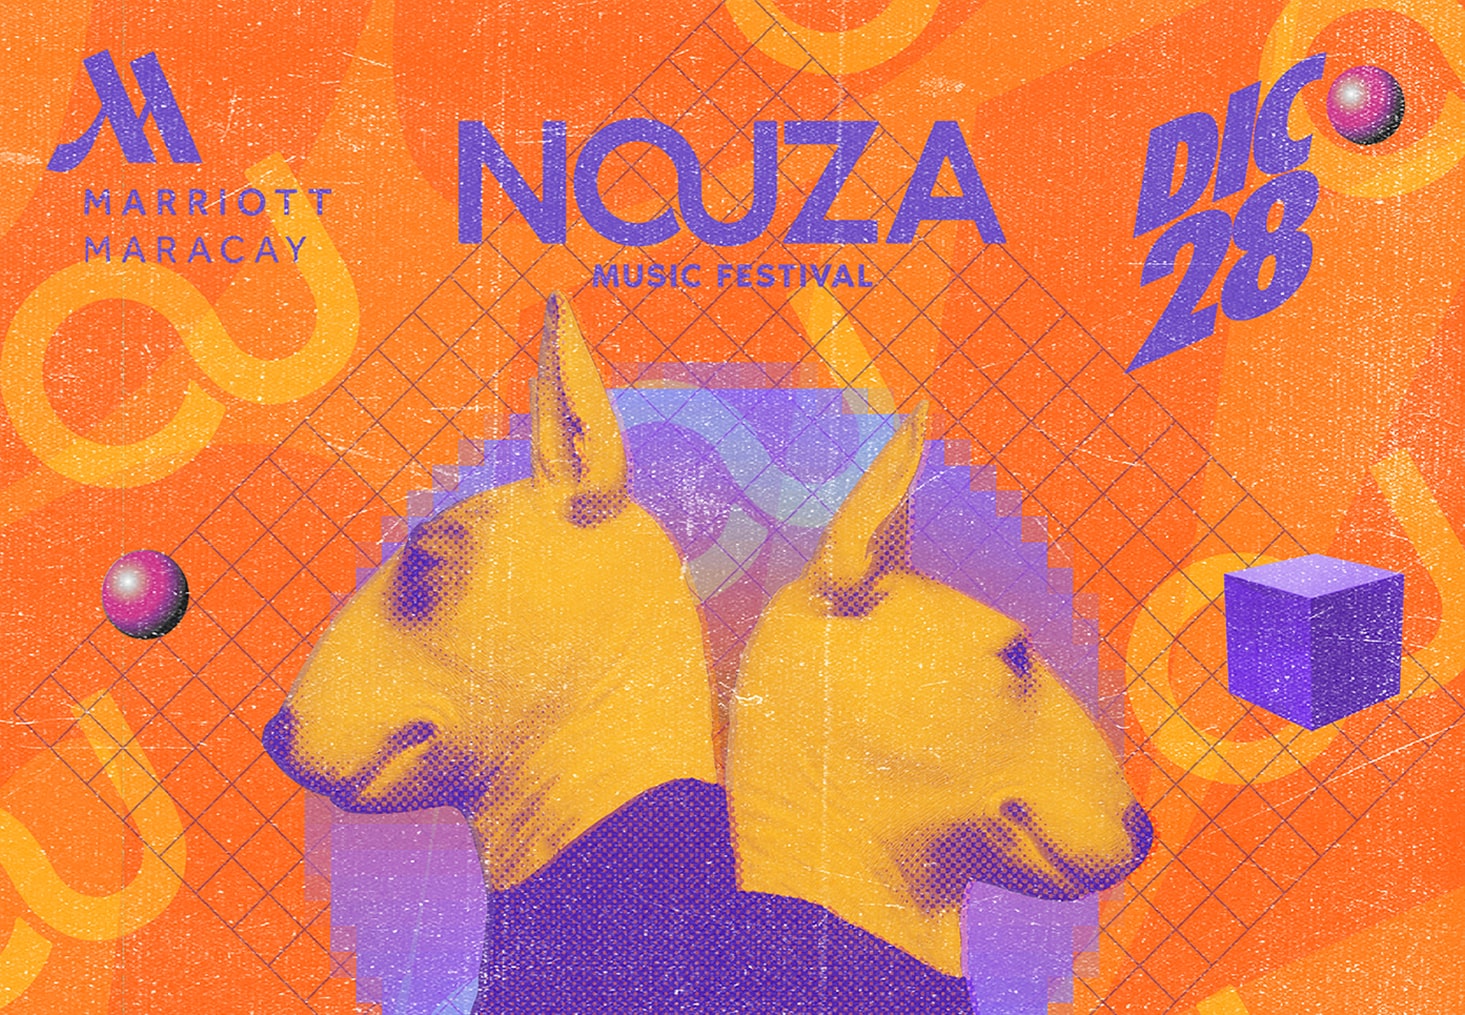 NOUZA MUSIC FESTIVAL DIC. 28-2019